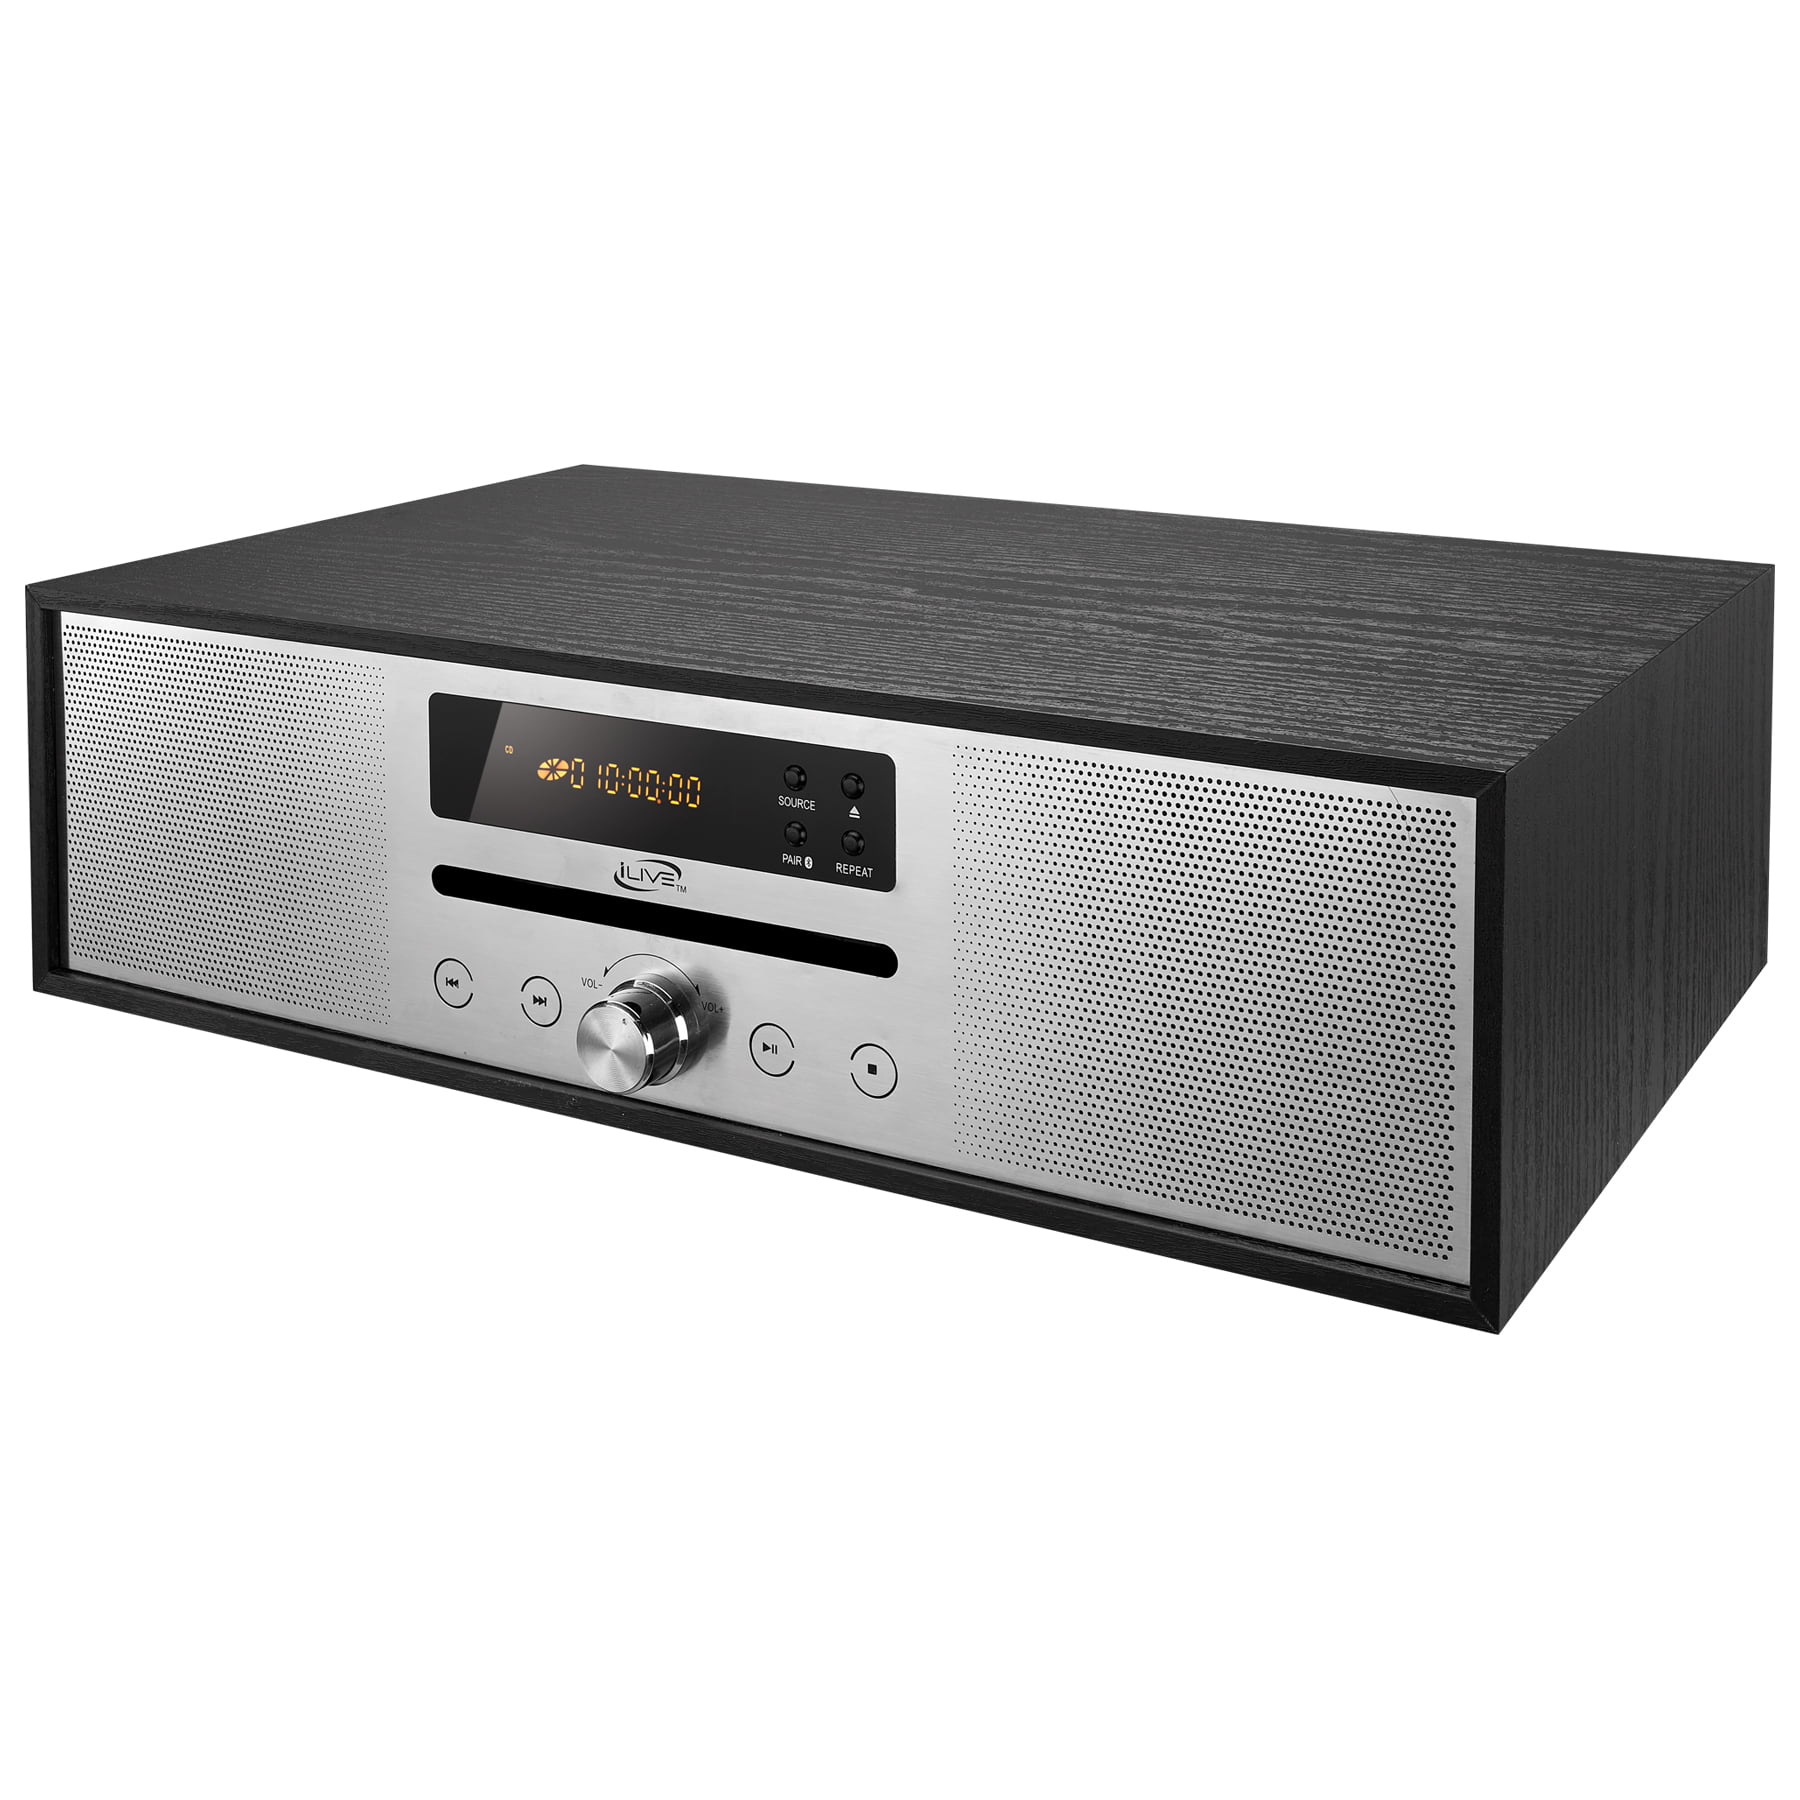 Ilive Ihb340b Ihb340b 20-watt Stereo Home Music System With Built-in Bluetooth,